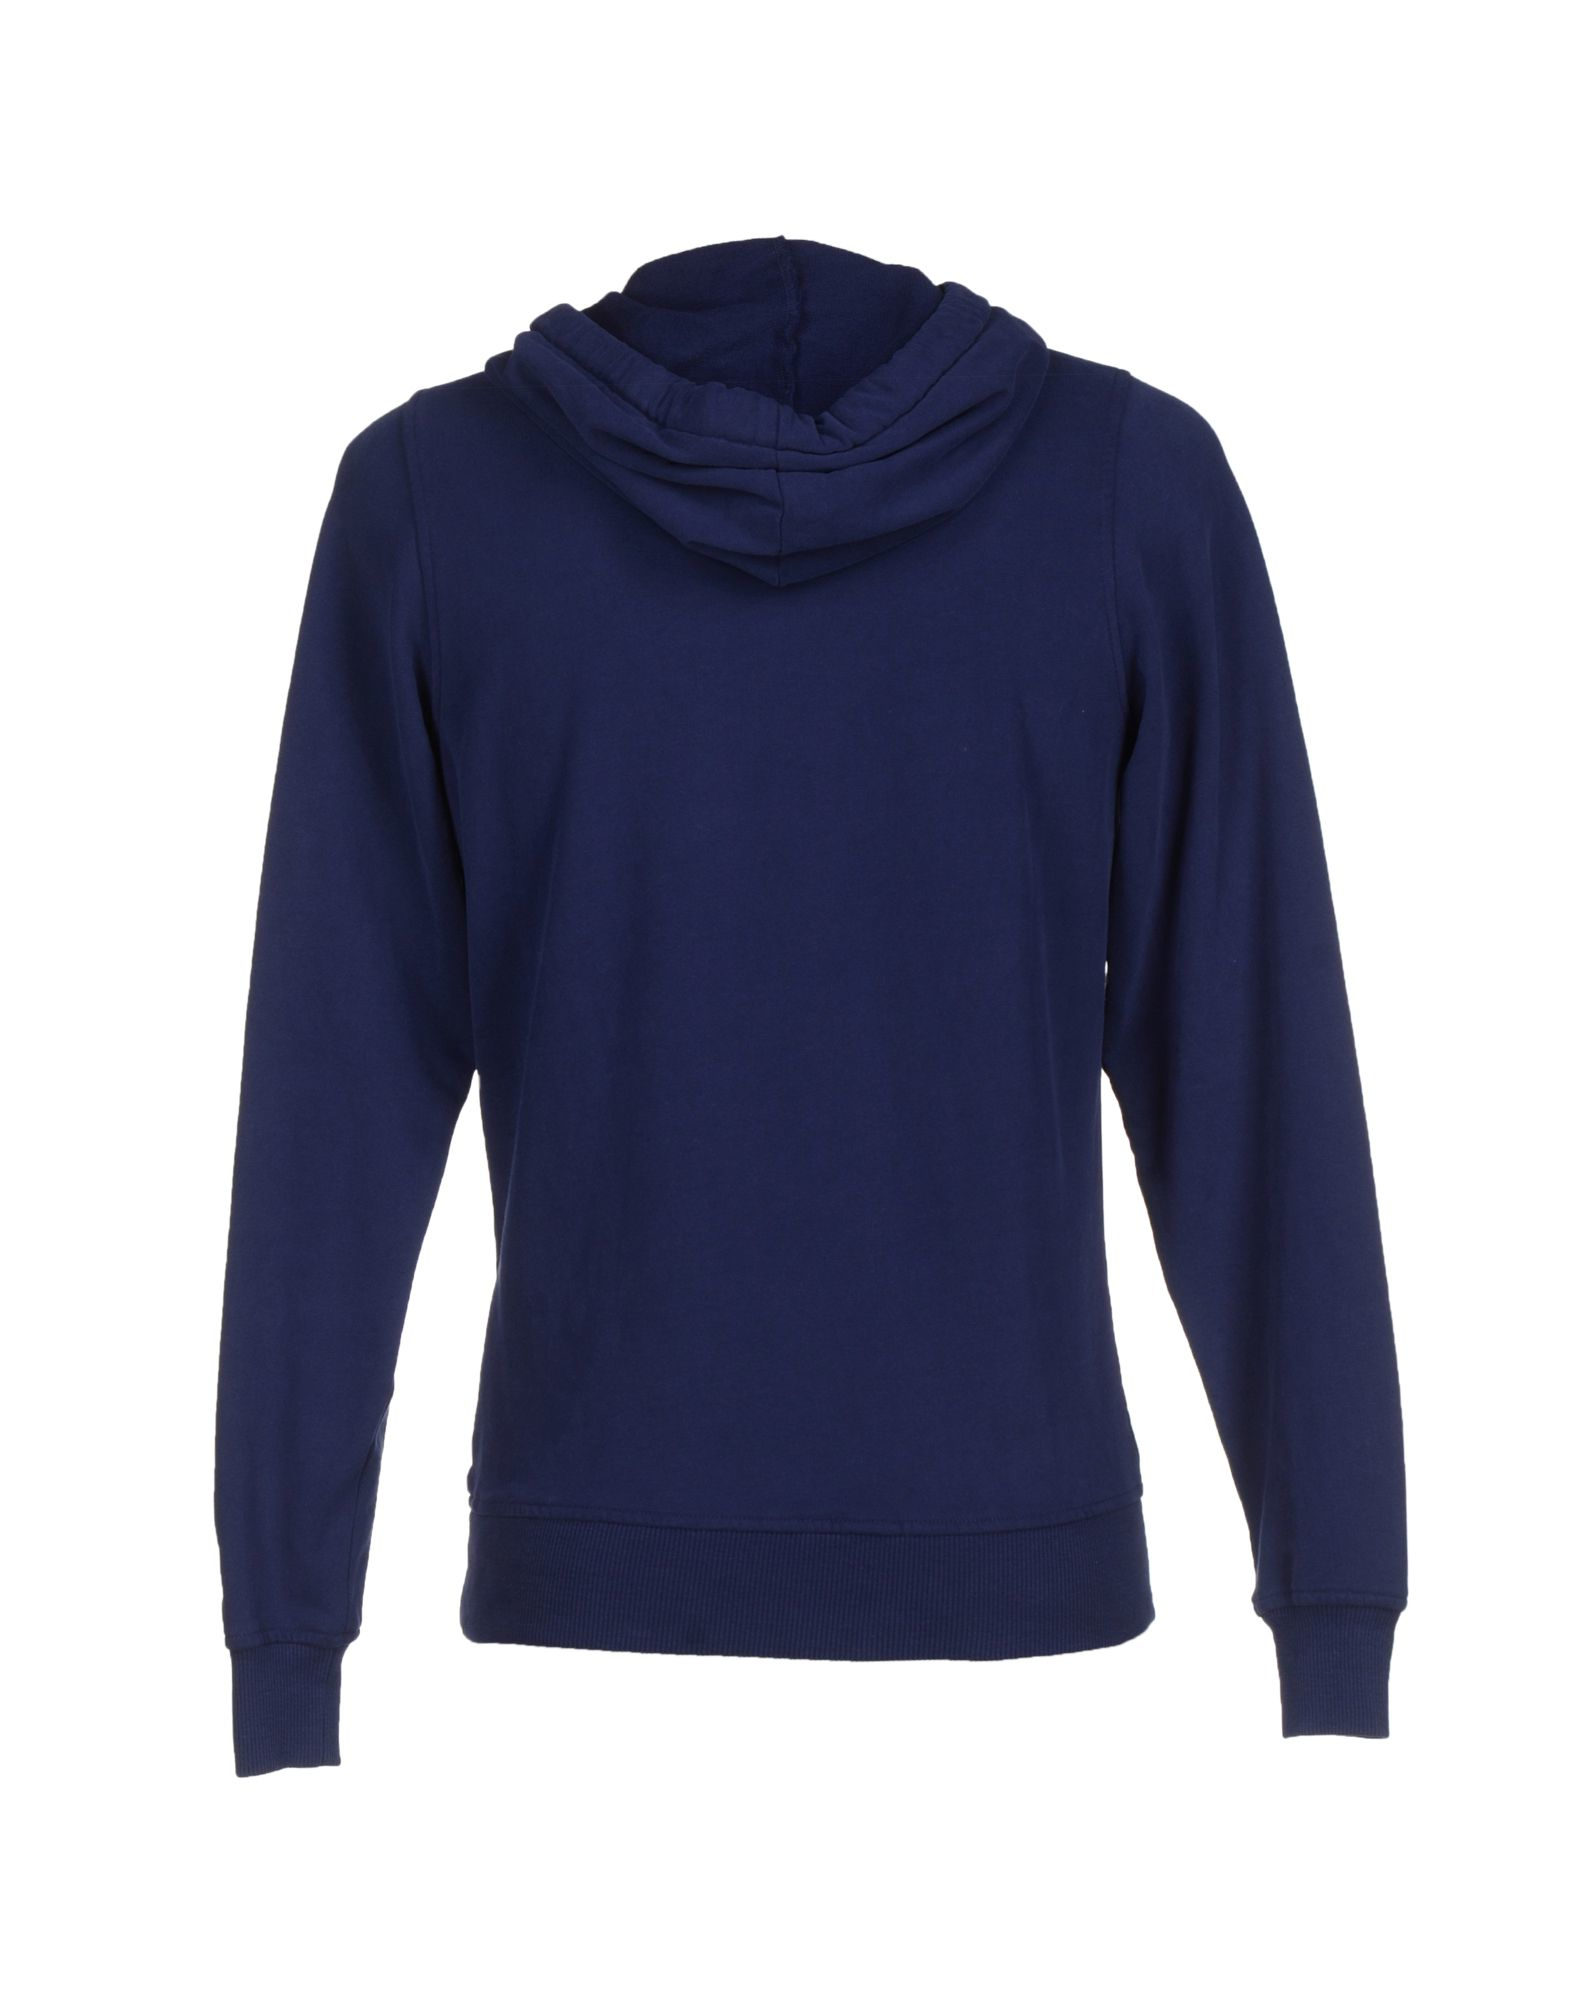 Lyst - New Balance Sweatshirt in Blue for Men